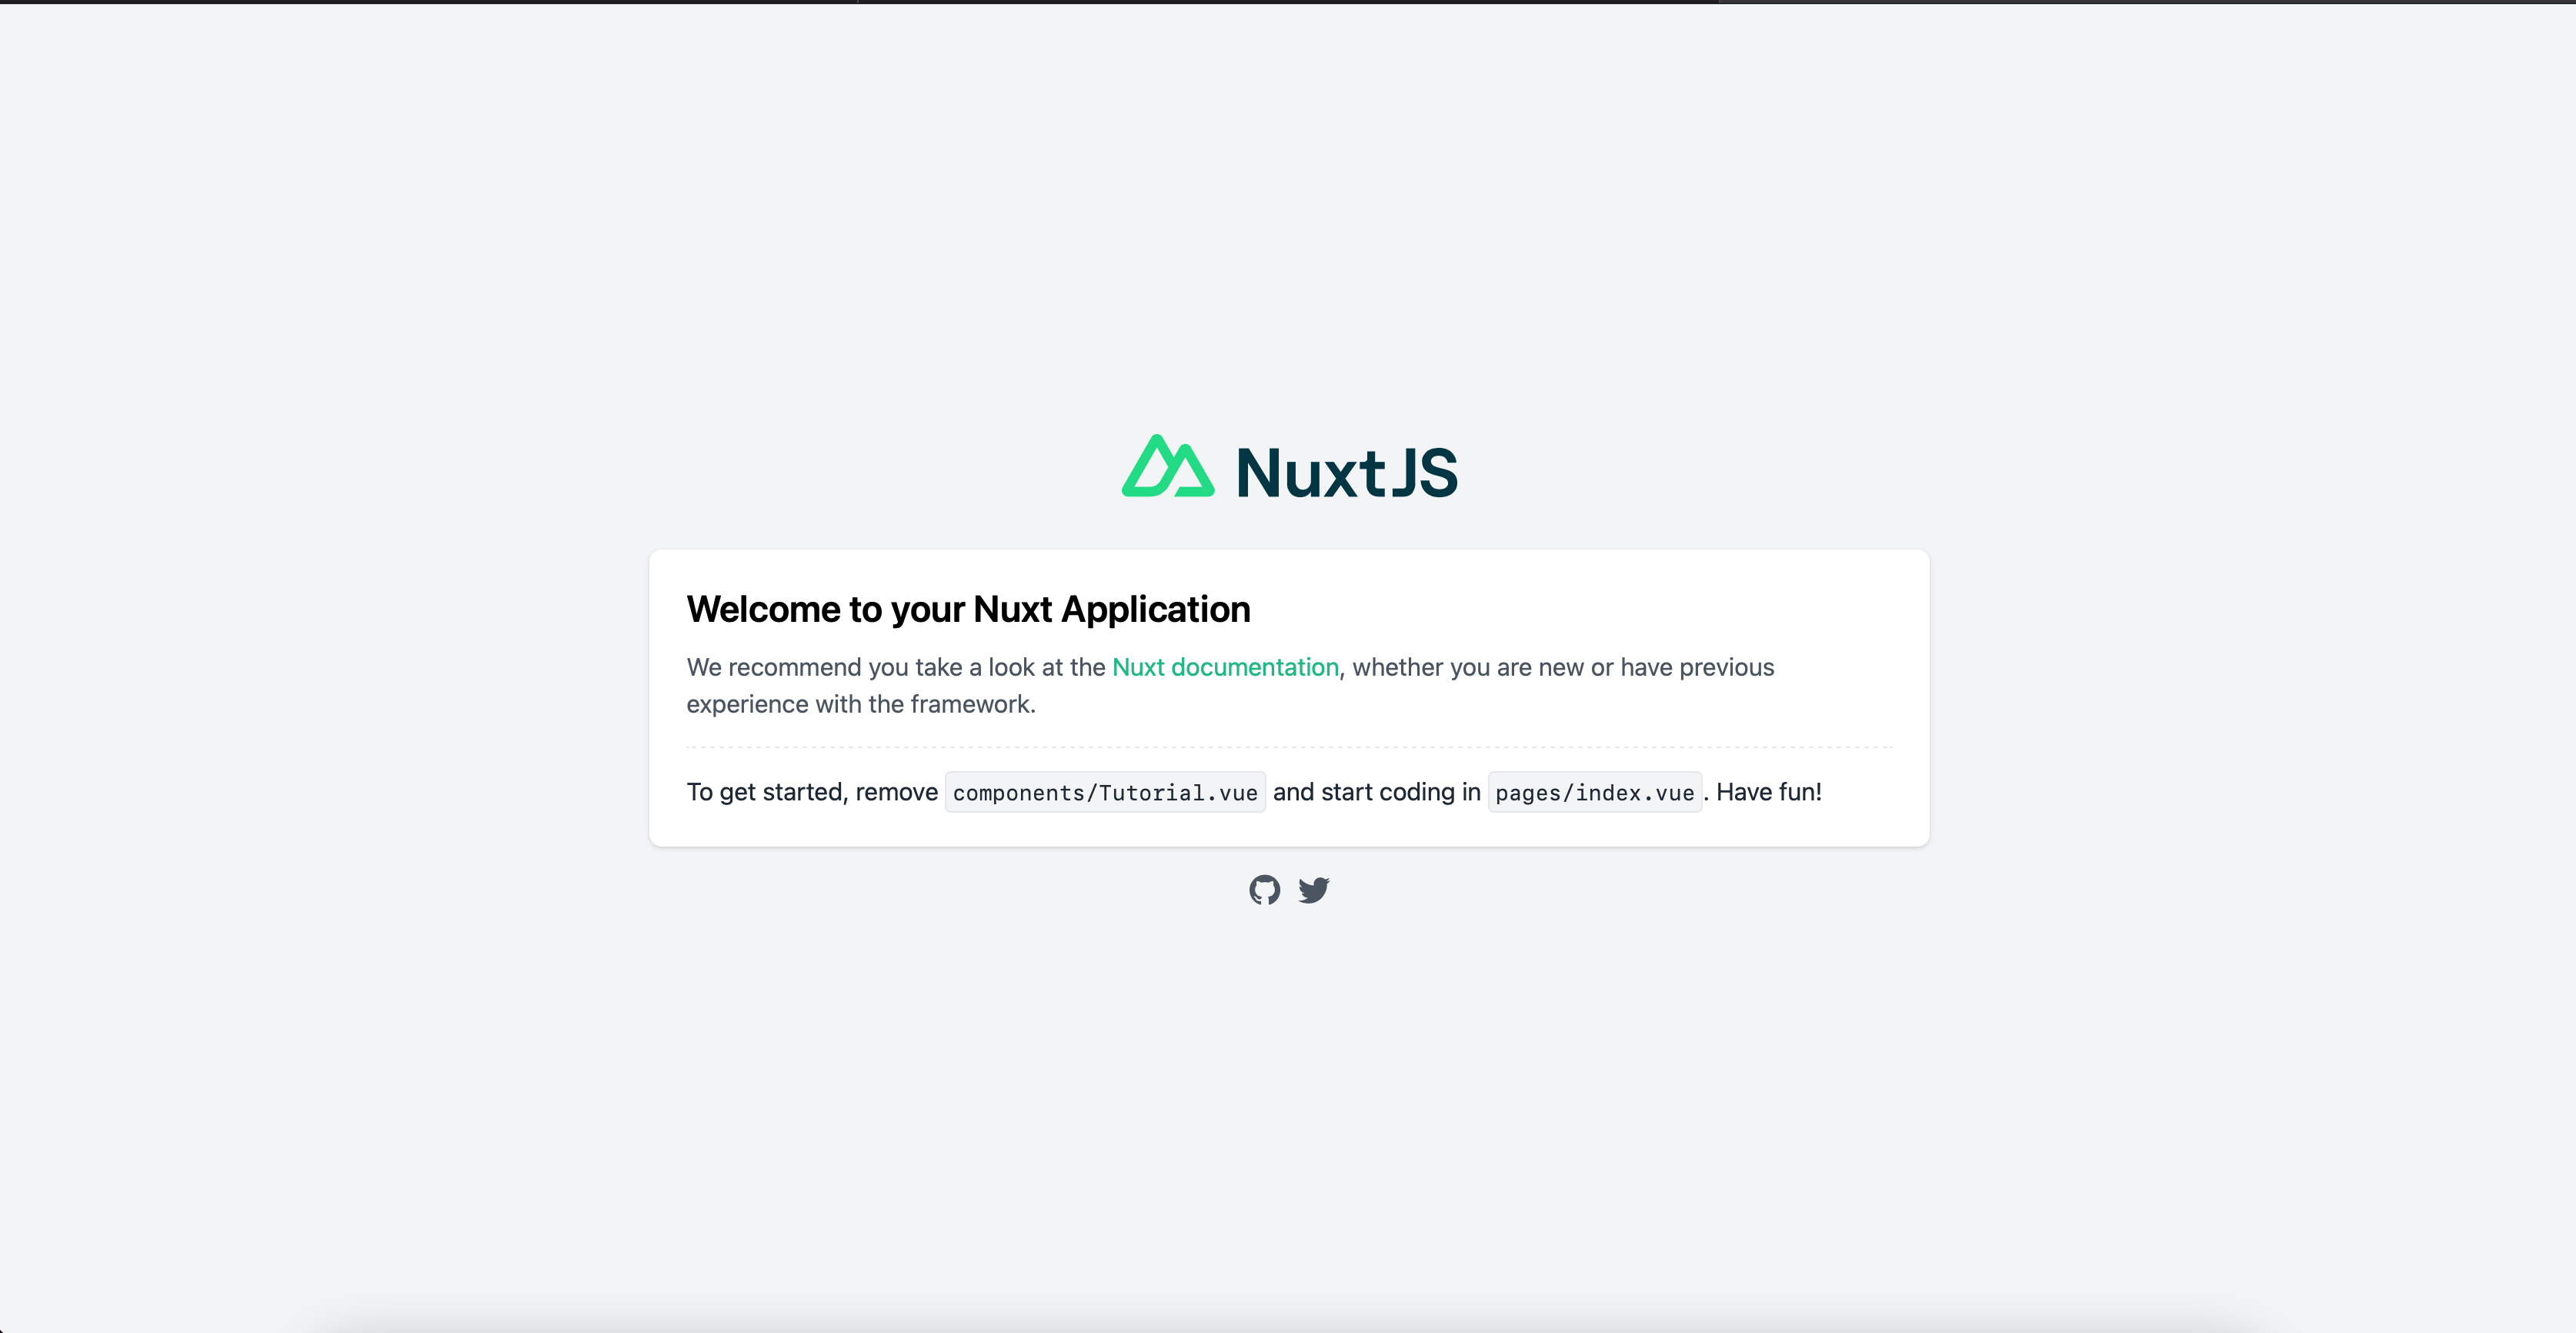 The Nuxt.js default splash screen